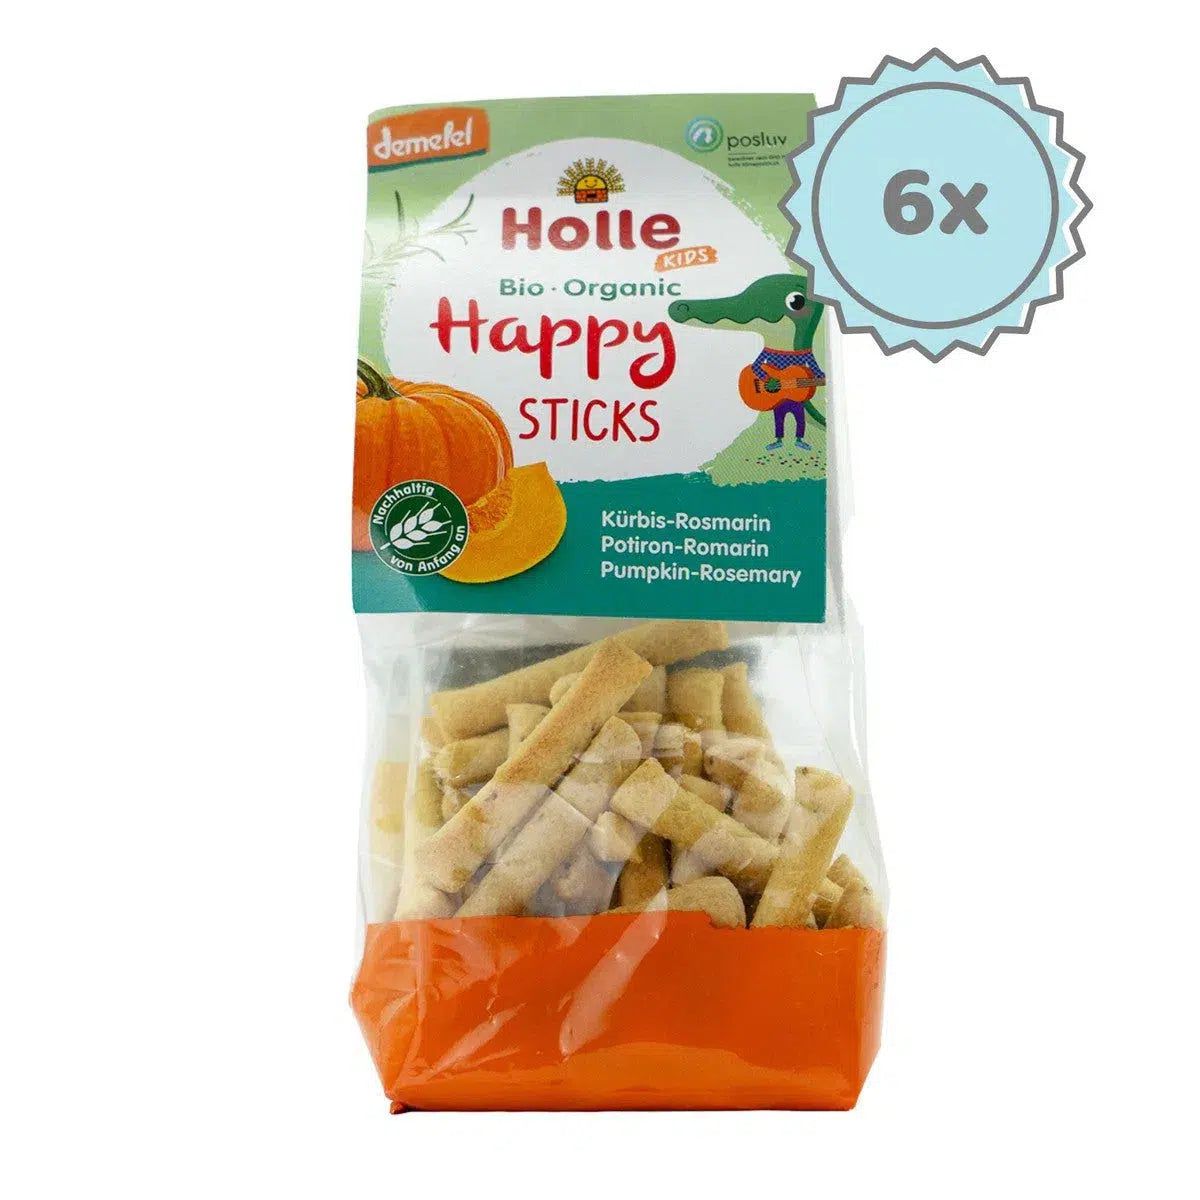 Holle Snack - Organic Pumpkin-Rosemary Sticks (3+ Years), 100g - 6 Packs